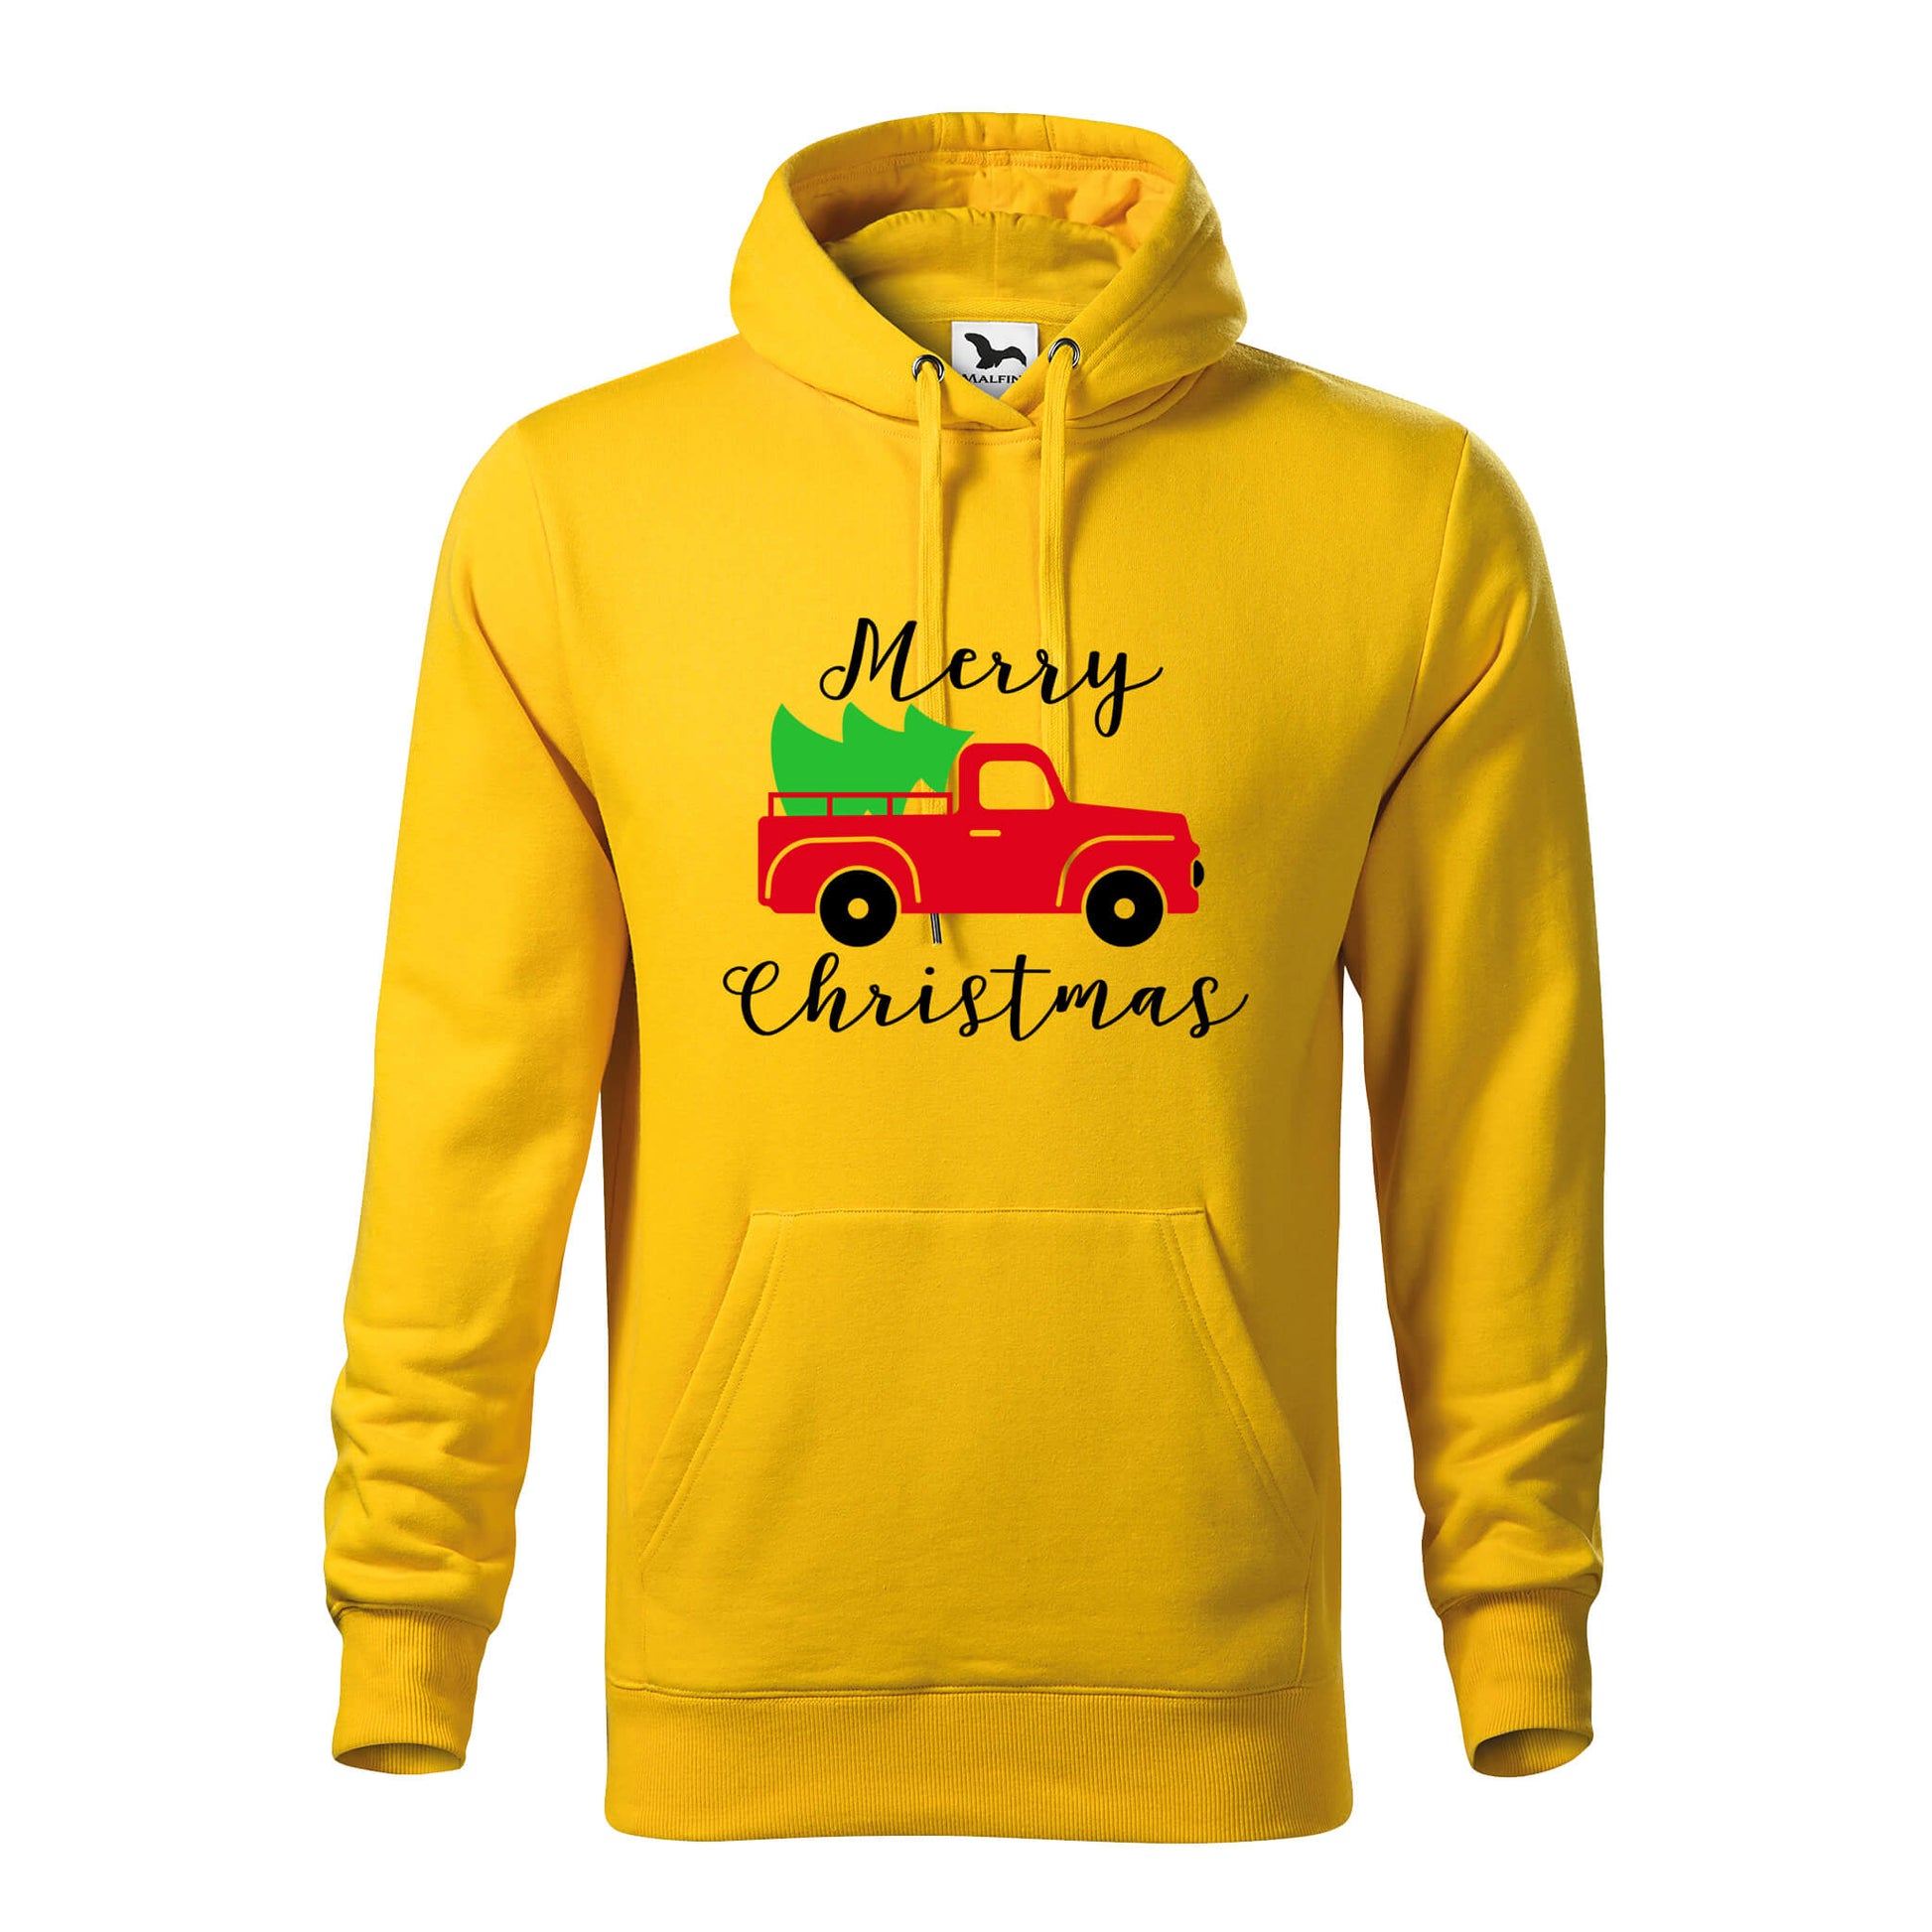 Merrychristmaswithtruck 2 hoodie - rvdesignprint